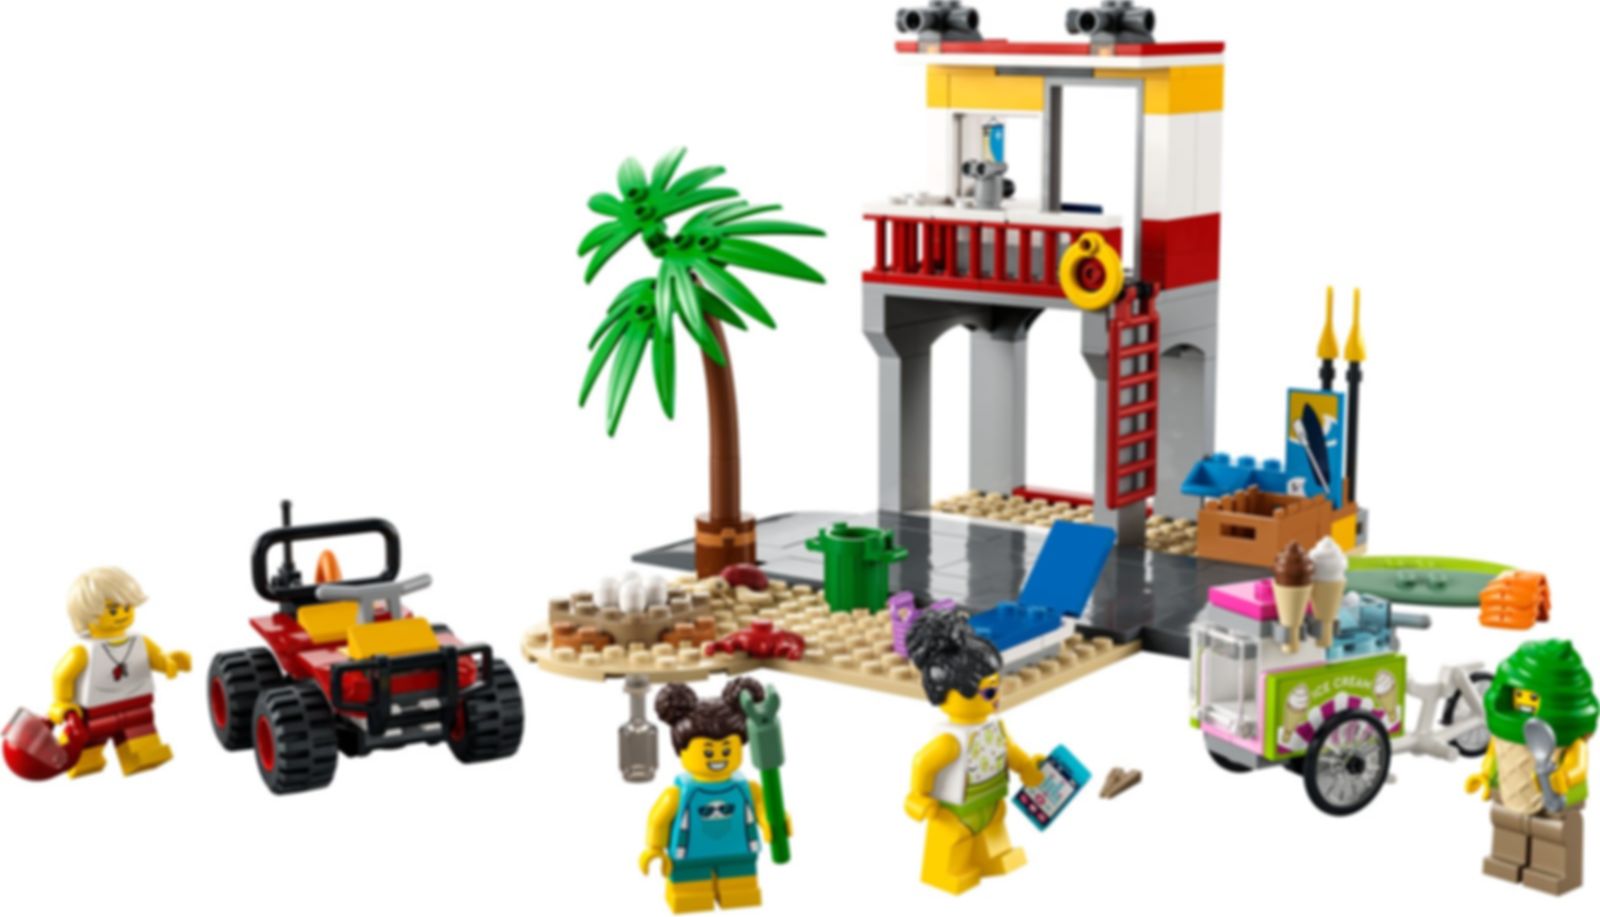 LEGO® City Beach Lifeguard Station components